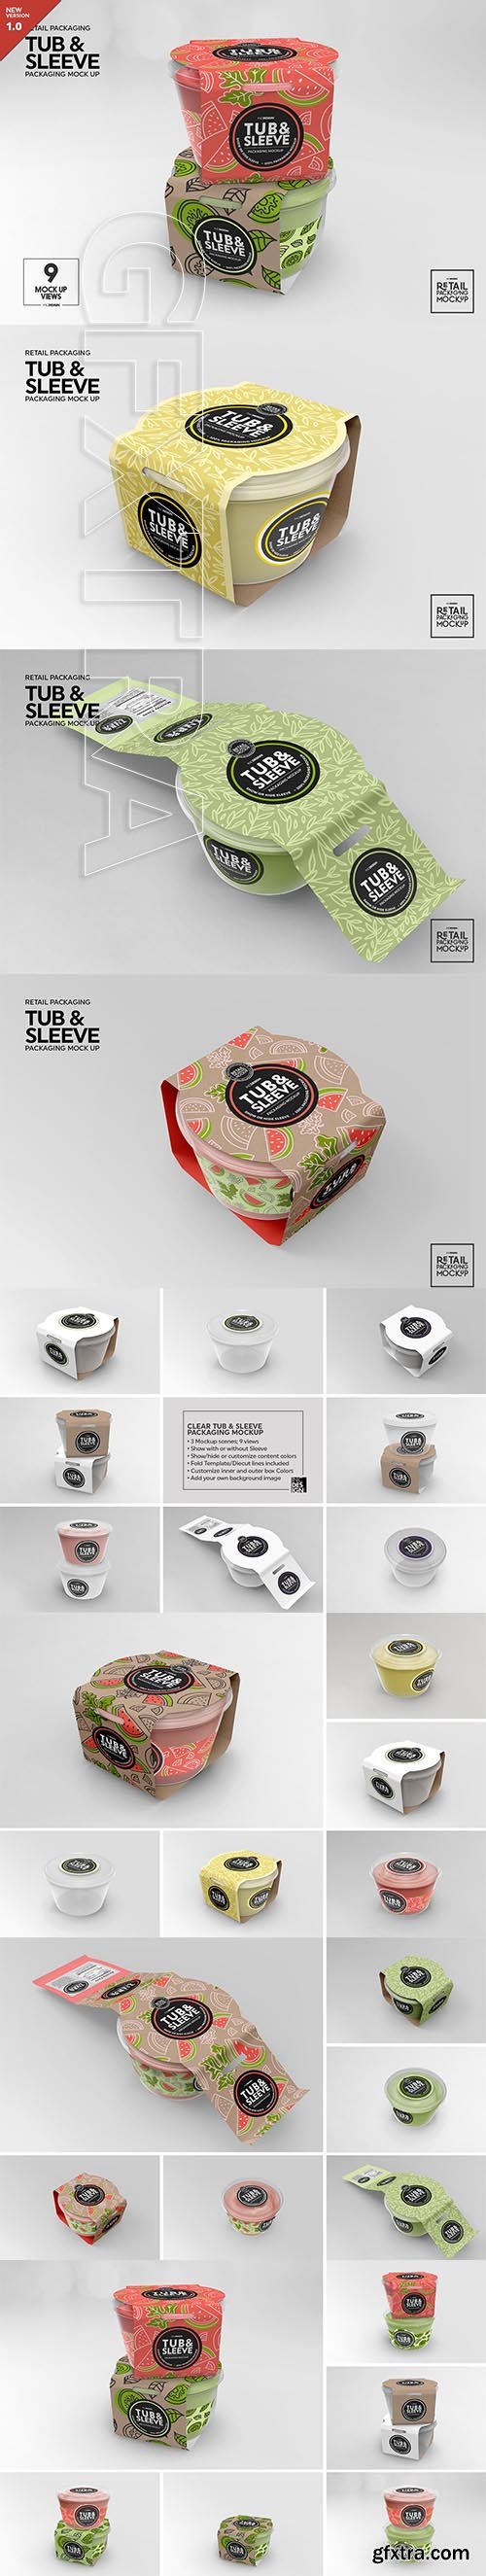 CreativeMarket - Tub and Sleeve Packaging Mockup 5987800